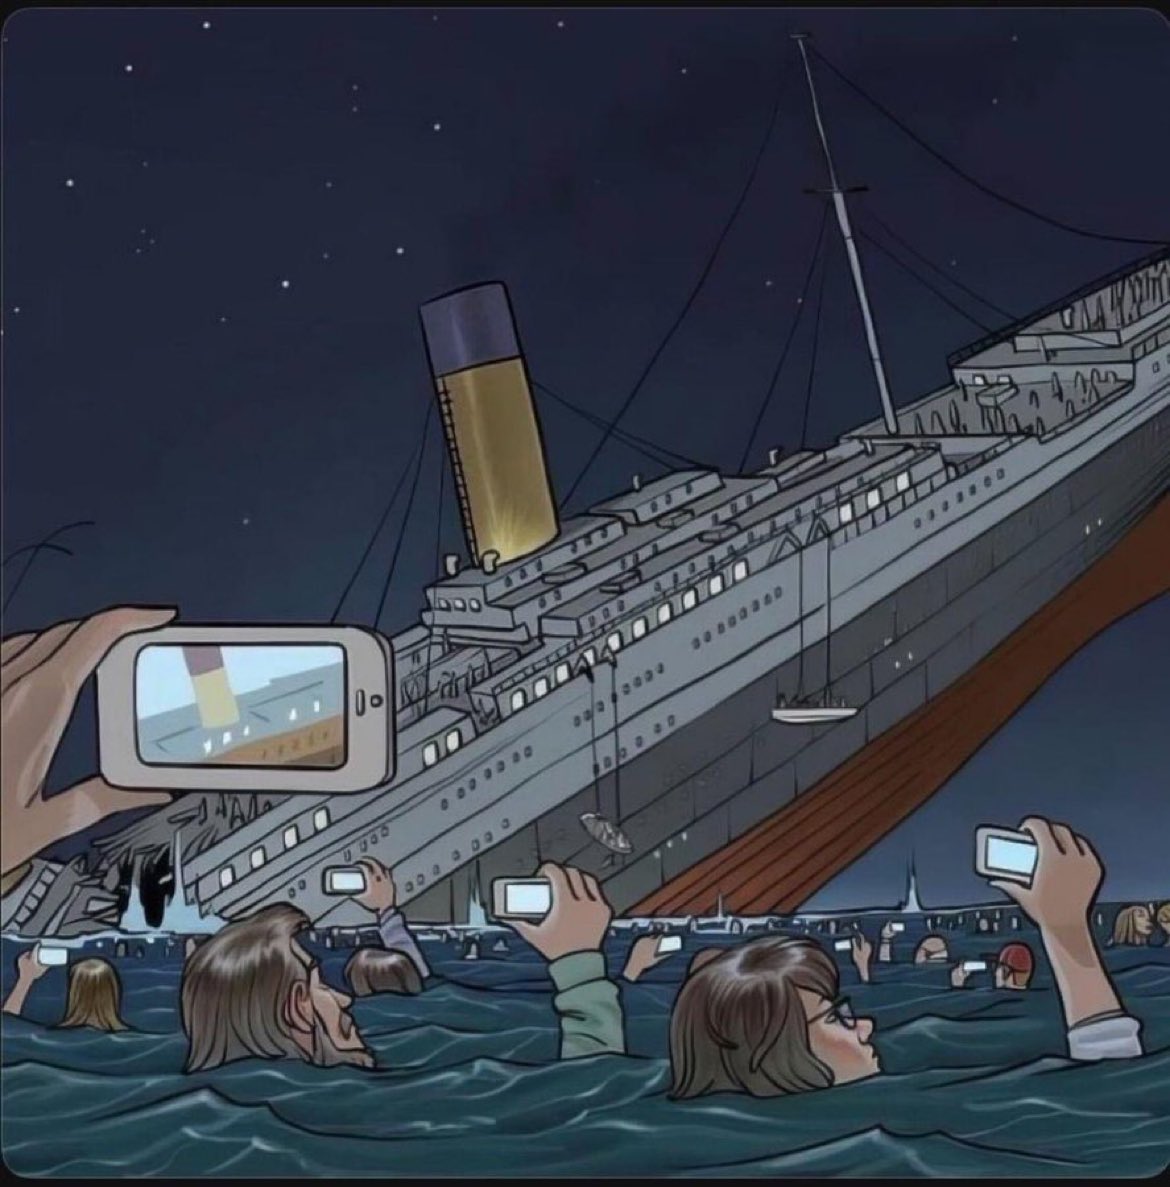 If The Titanic Sank Today: